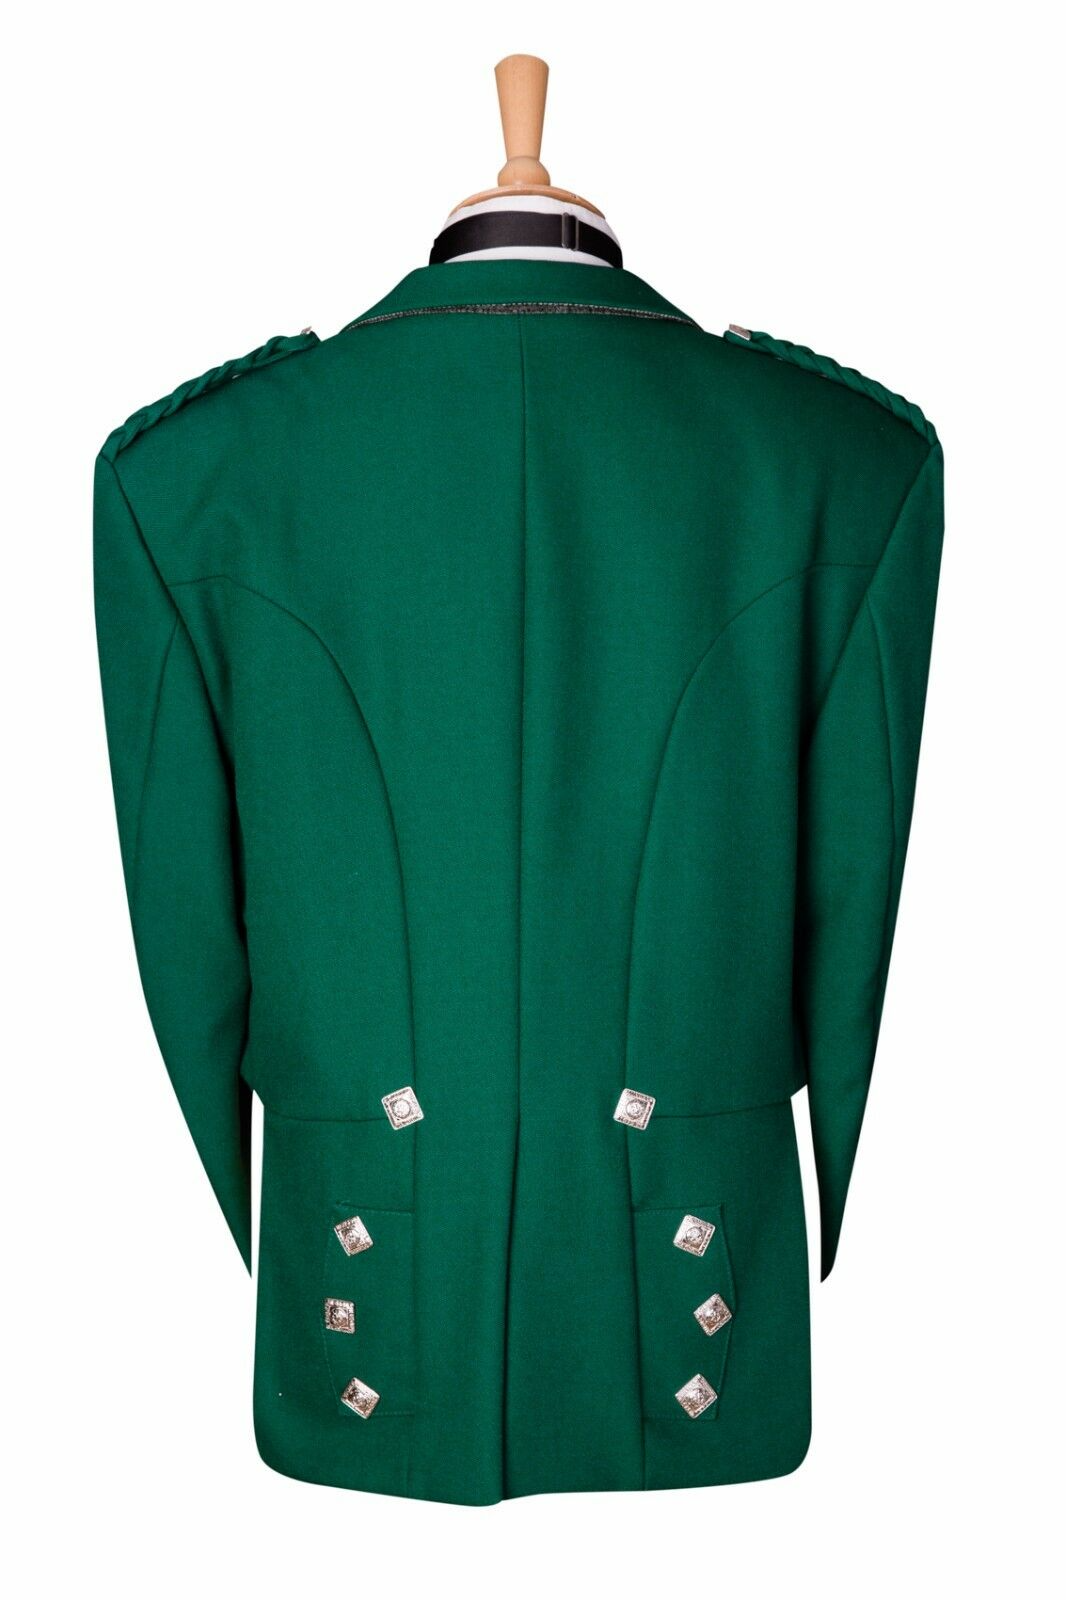 Green Prince Charlie jacket